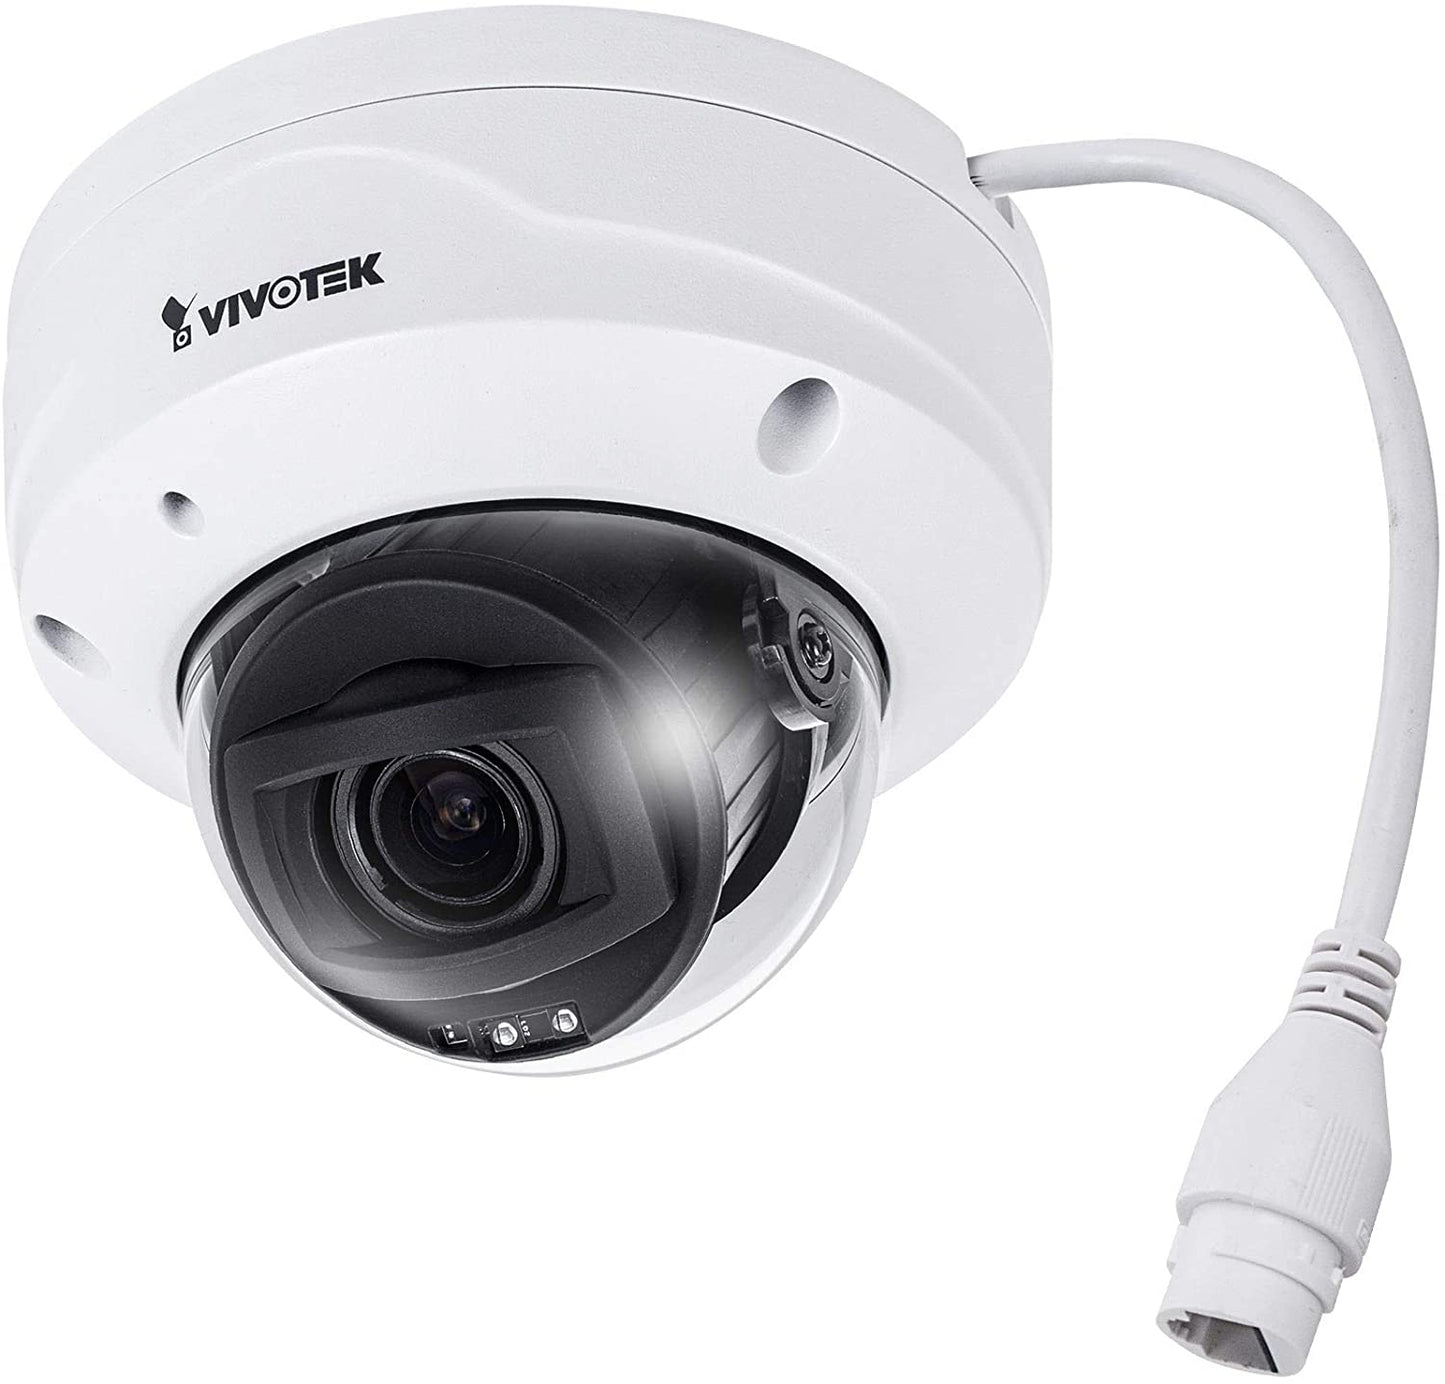 VIVOTEK C-Serie FD9388-HTV Fixed Dome Camera 5 MP Outdoor IR 2.8-12 mm IP66